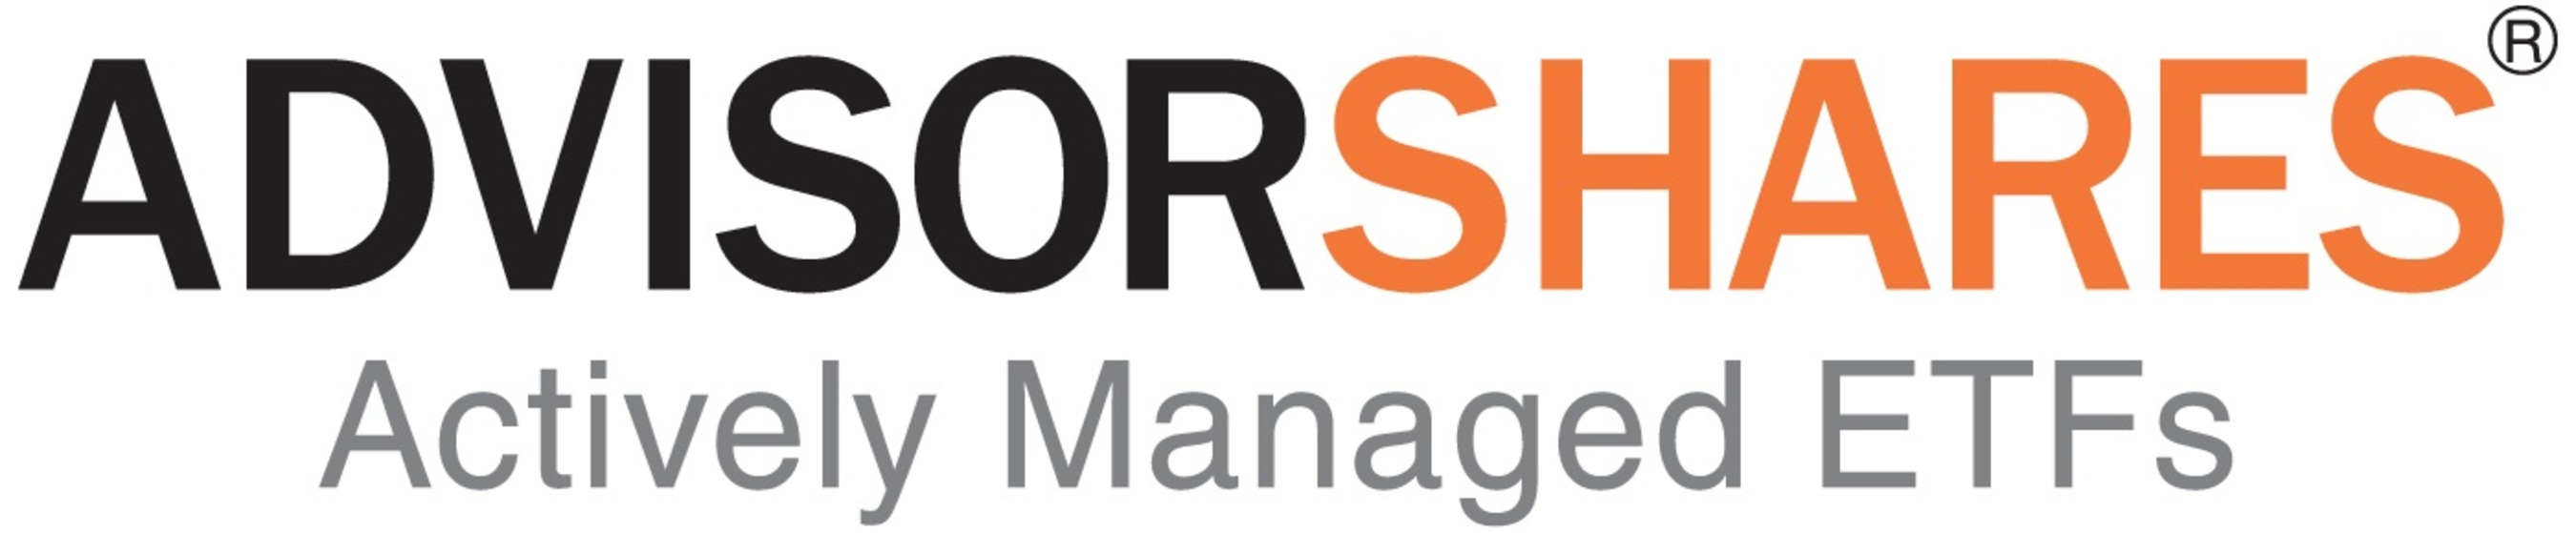 AdvisorShares logo